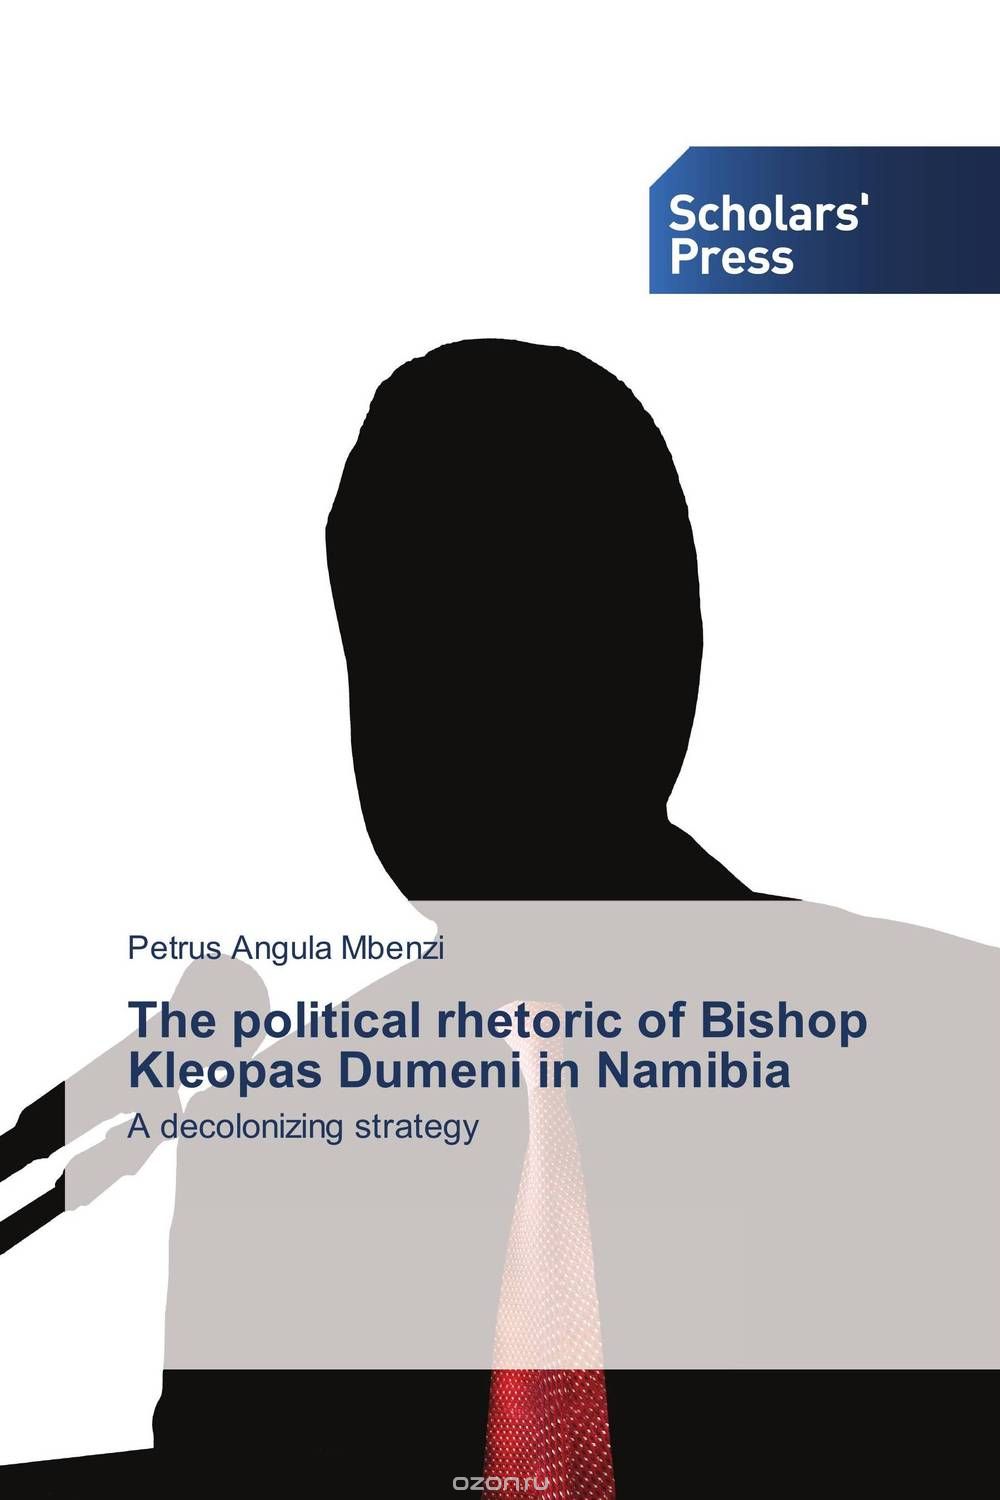 Скачать книгу "The political rhetoric of Bishop Kleopas Dumeni in Namibia"